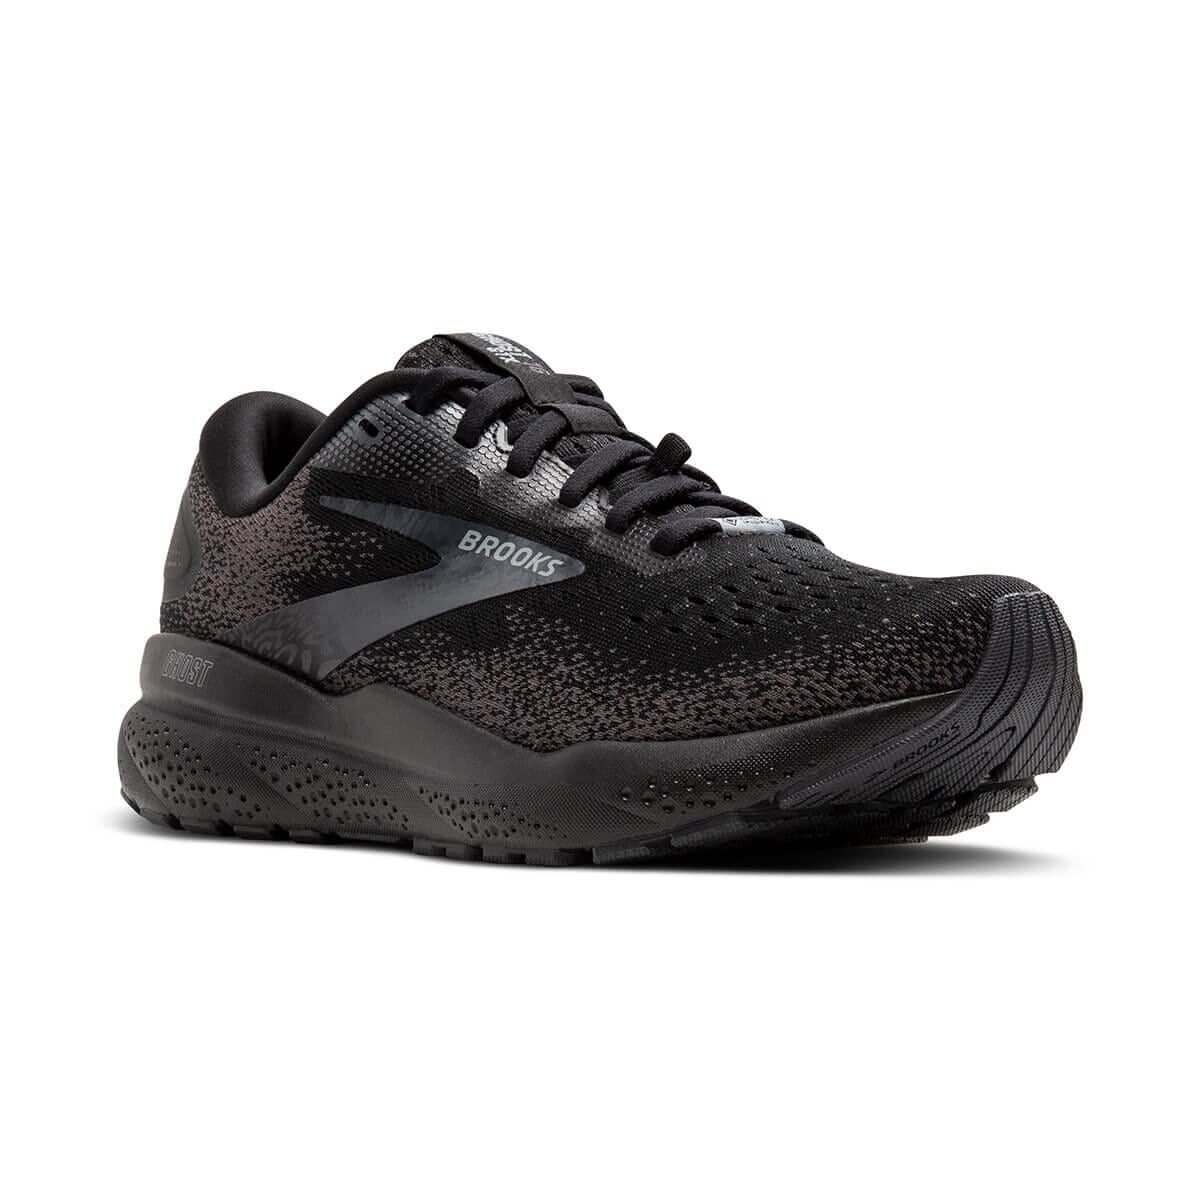 Brooks Ghost 16 GTX Men's Road Running Shoes Black/Black/Ebony Medium (D) US 8.5